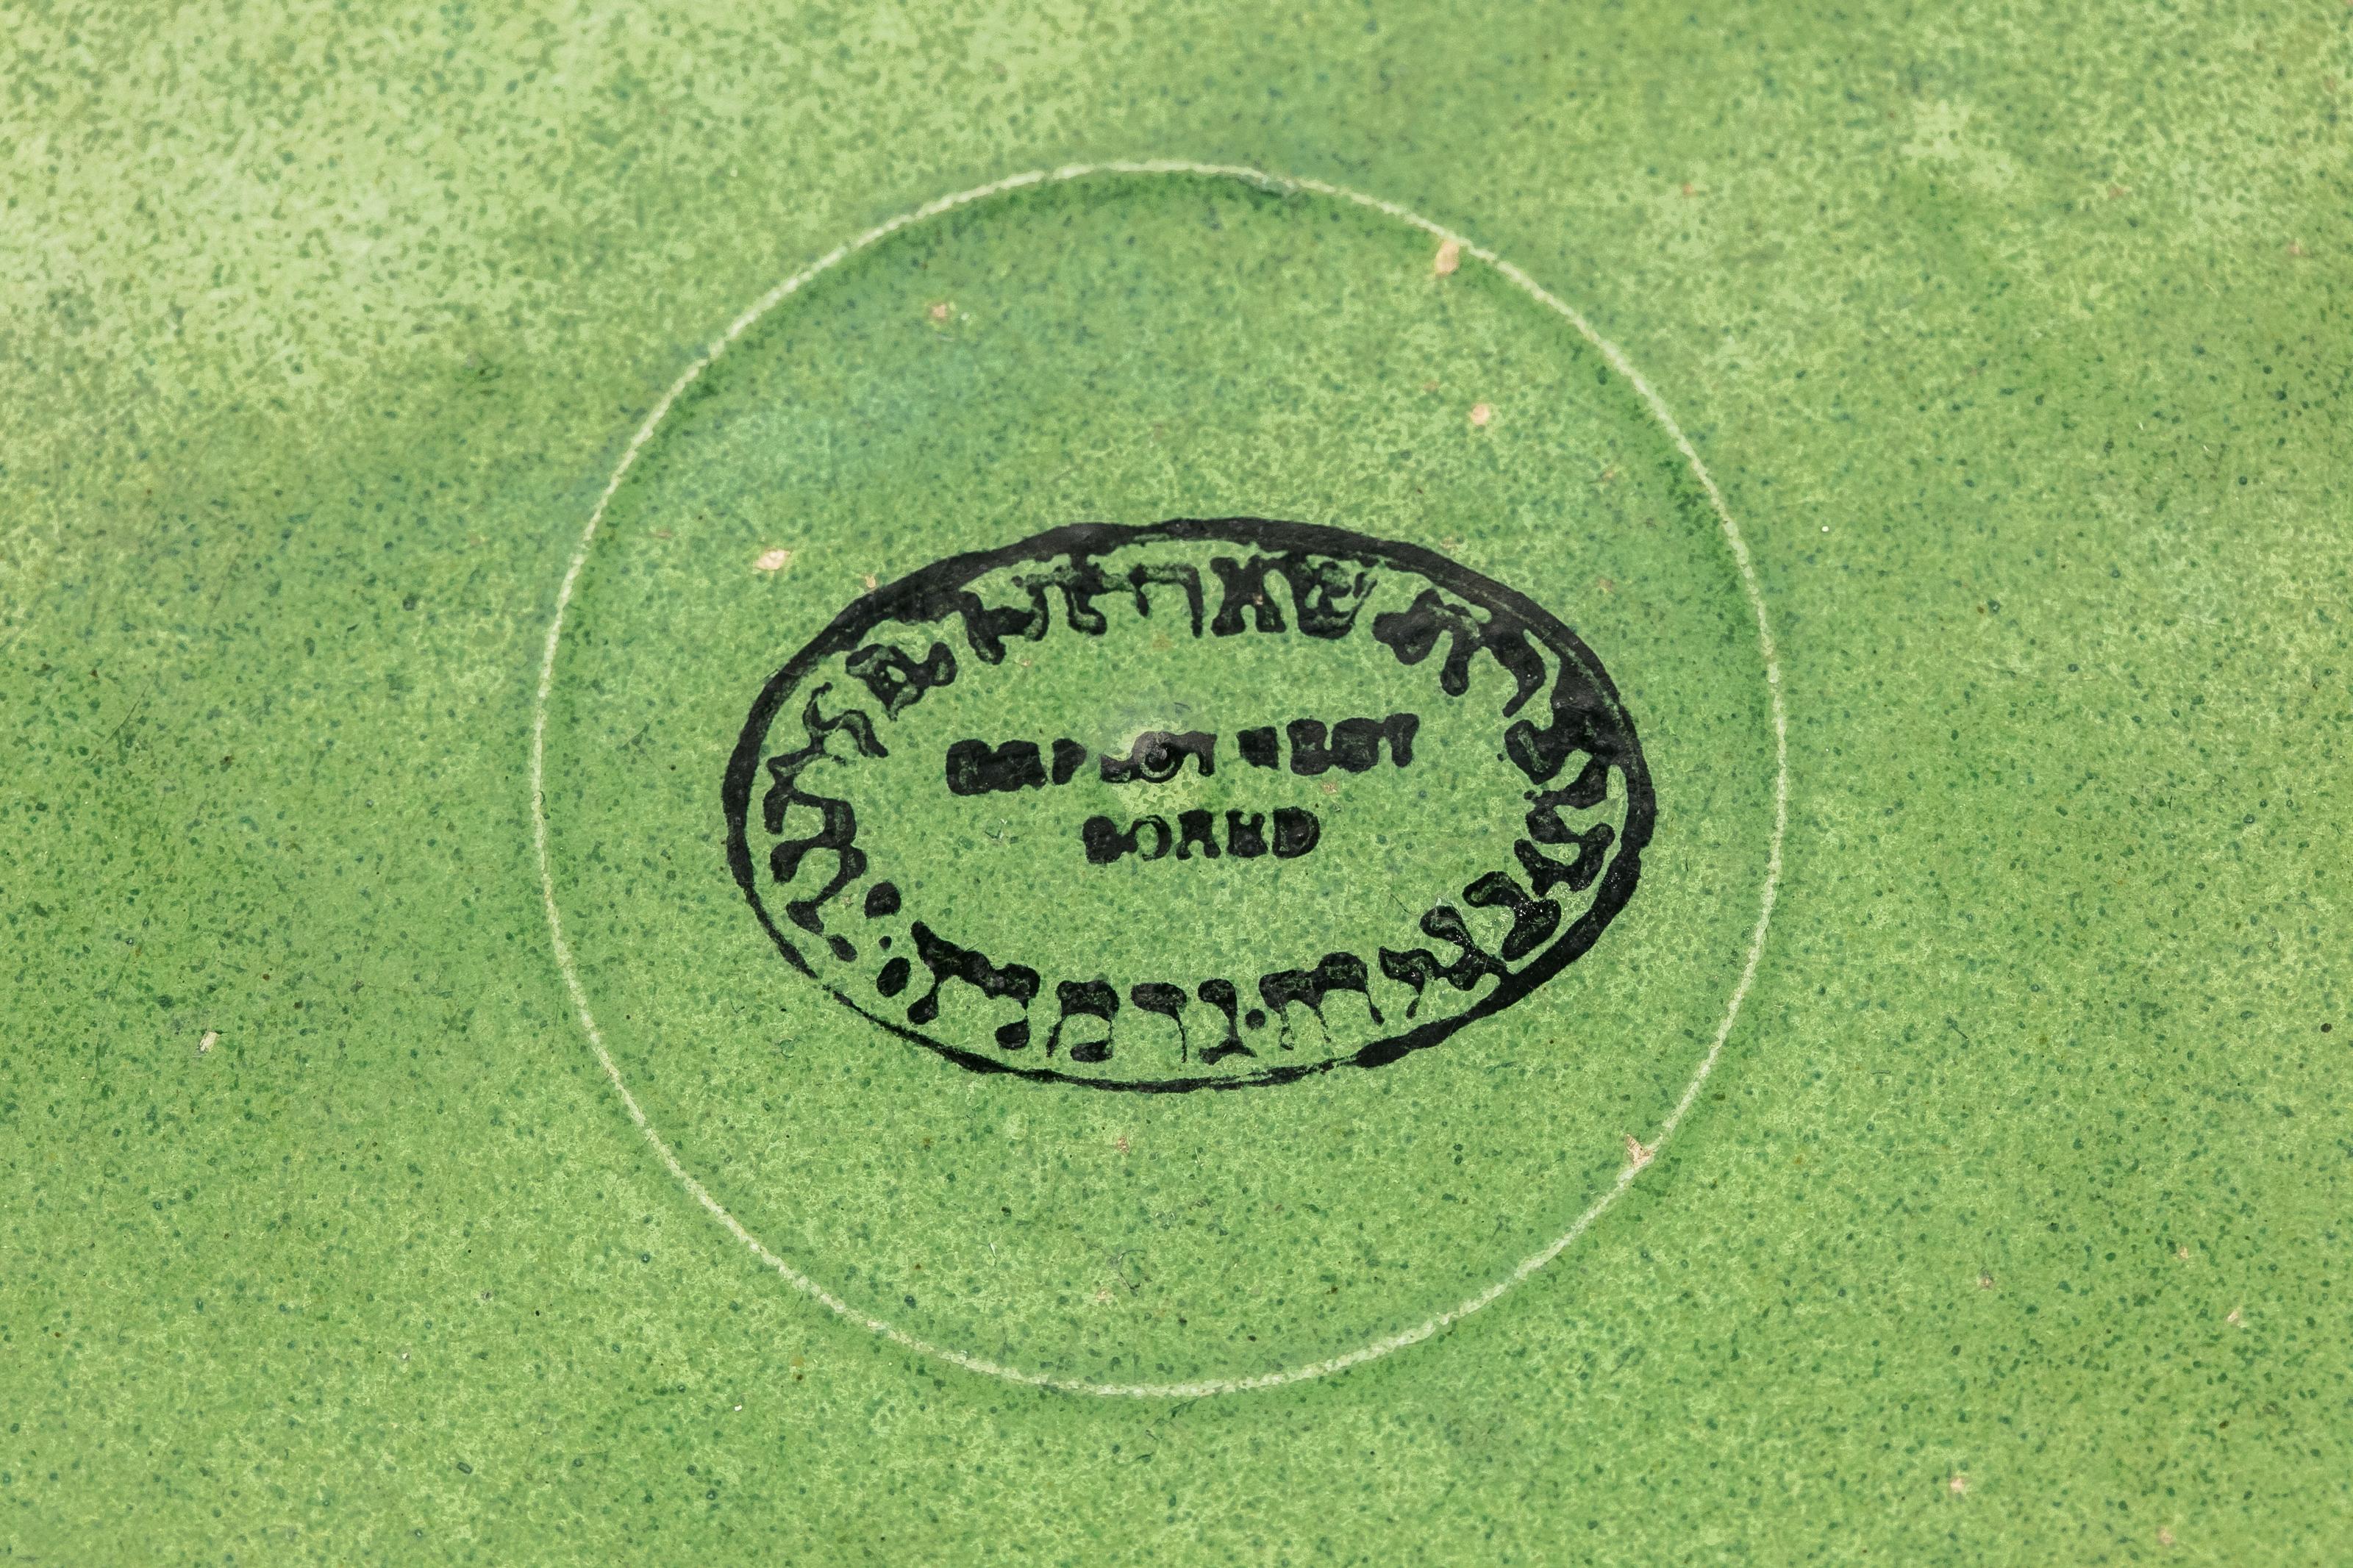 Mid-20th Century Post World War II Green Gazed Earthenware Passover Seder Plate